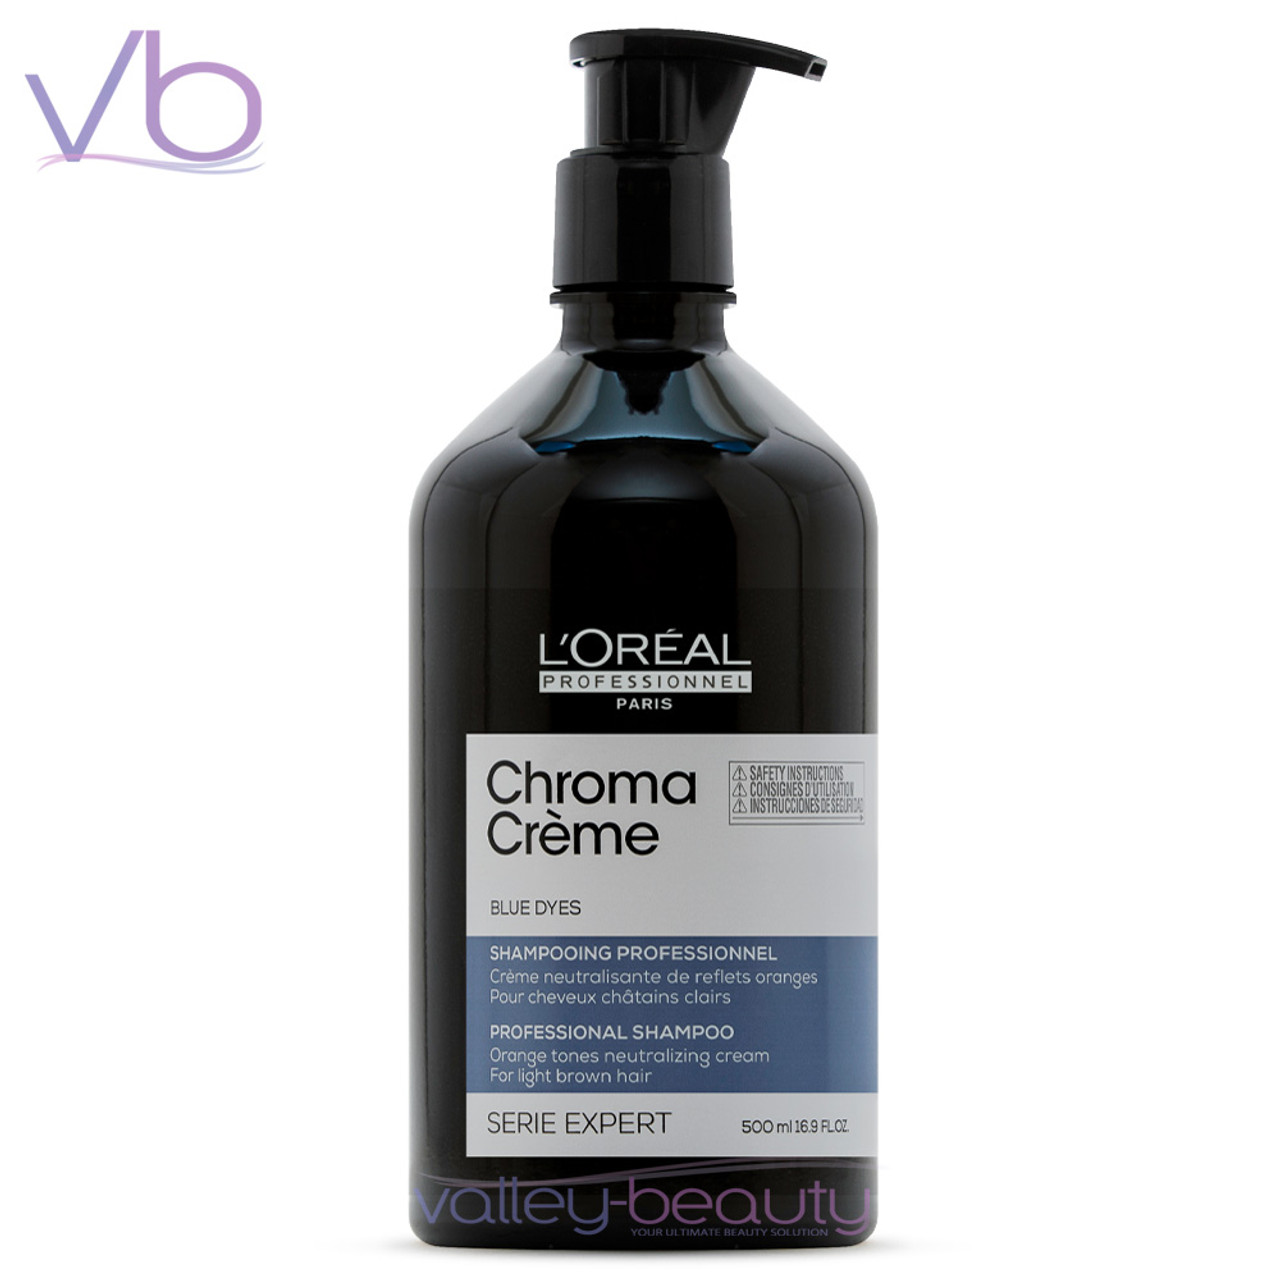 L'Oreal L’Oreal Professionnel Chroma Creme Blue Dyes Shampoo | Orange Tones Neutralizing Cleanser for Light Brown Hair, 16.9oz